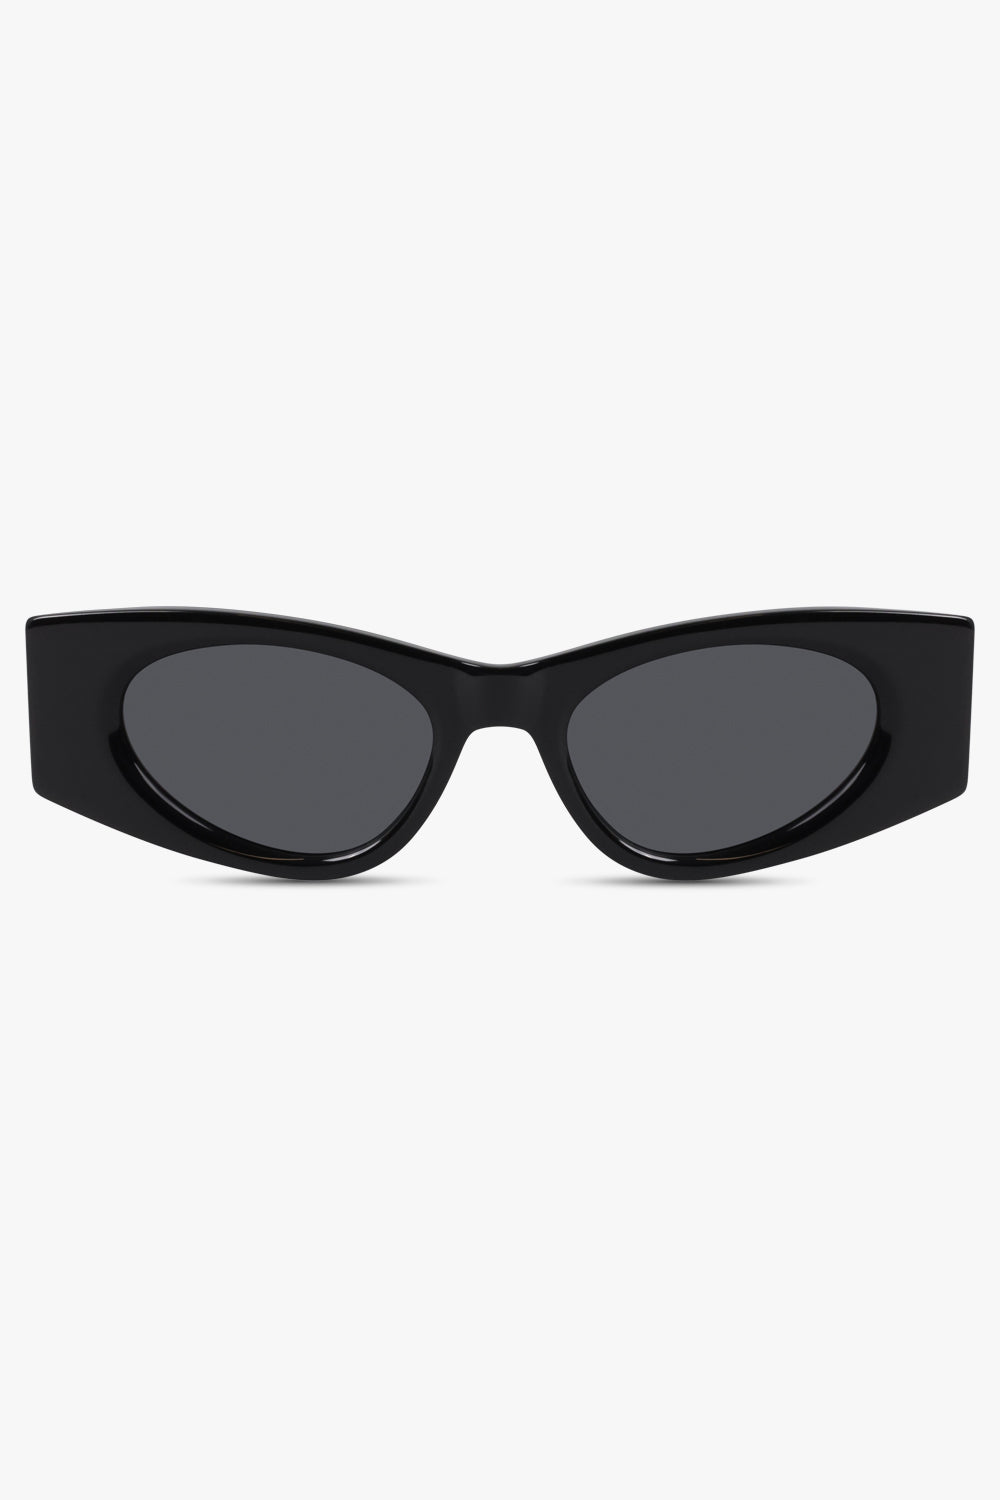 ALAIA ACCESSORIES BLACK / BLACK-BLACK-SMOKE AA0075S Slim Cat Eye Lettering Logo Sunglassses | Black